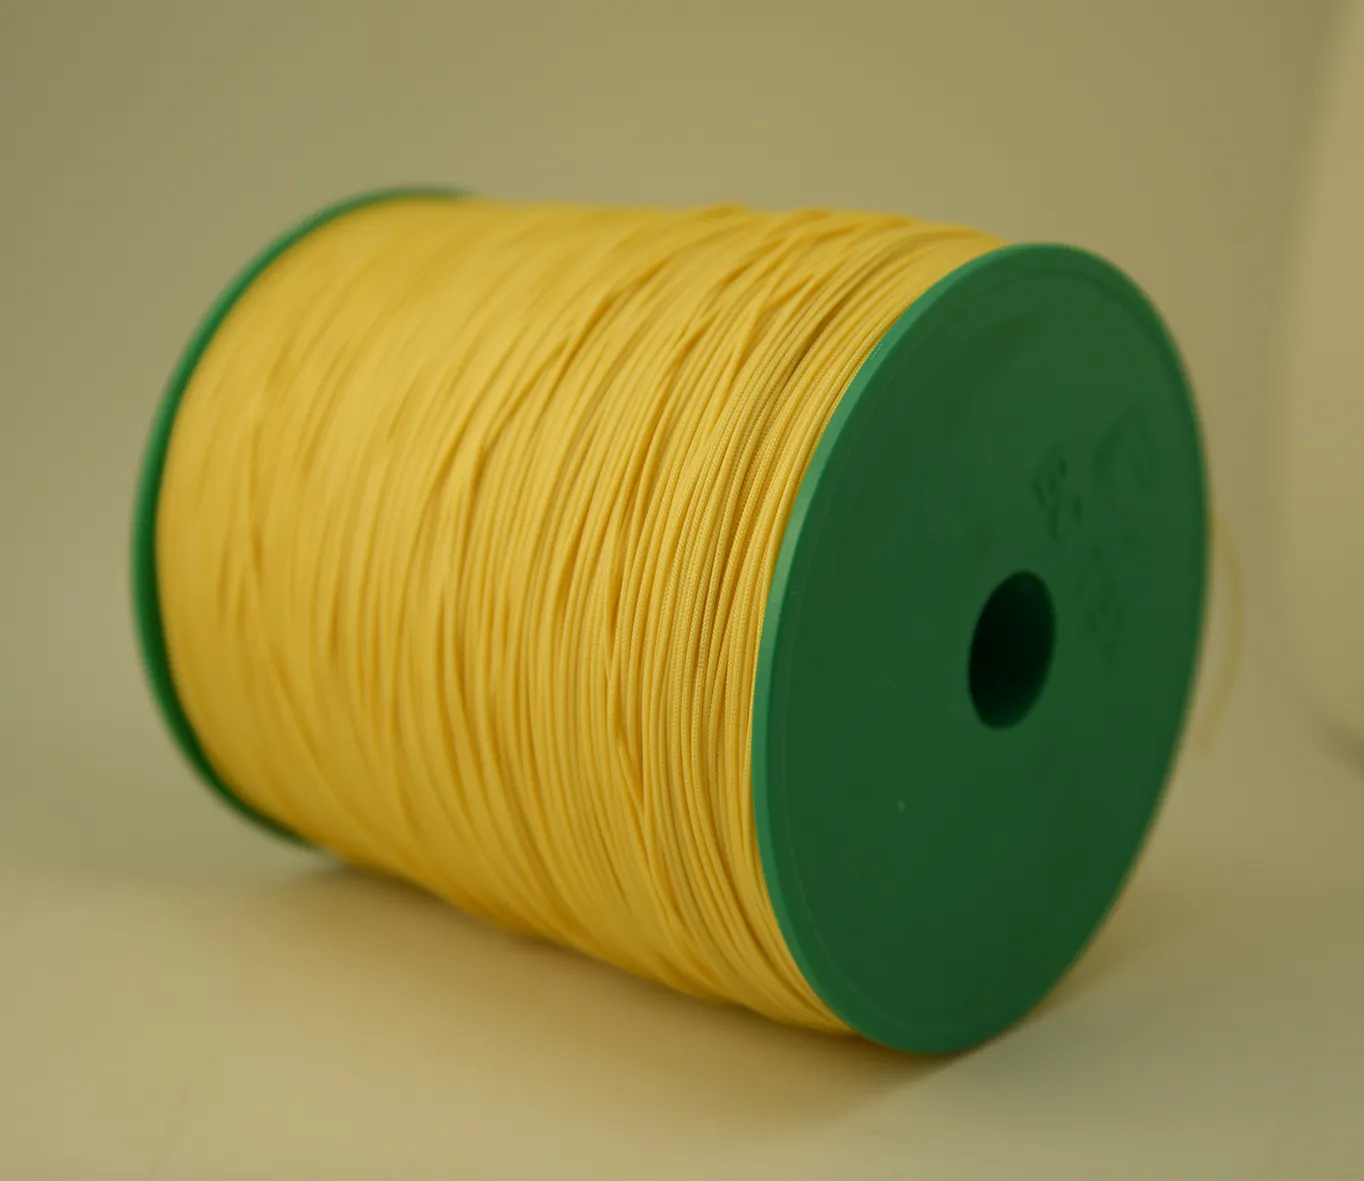 Jacquard Maschinen teile Kabelbaum Kabel etikett Webstuhl Textil webmaschine Ersatzteile 0,8mm Durchmesser für Webmaschinen